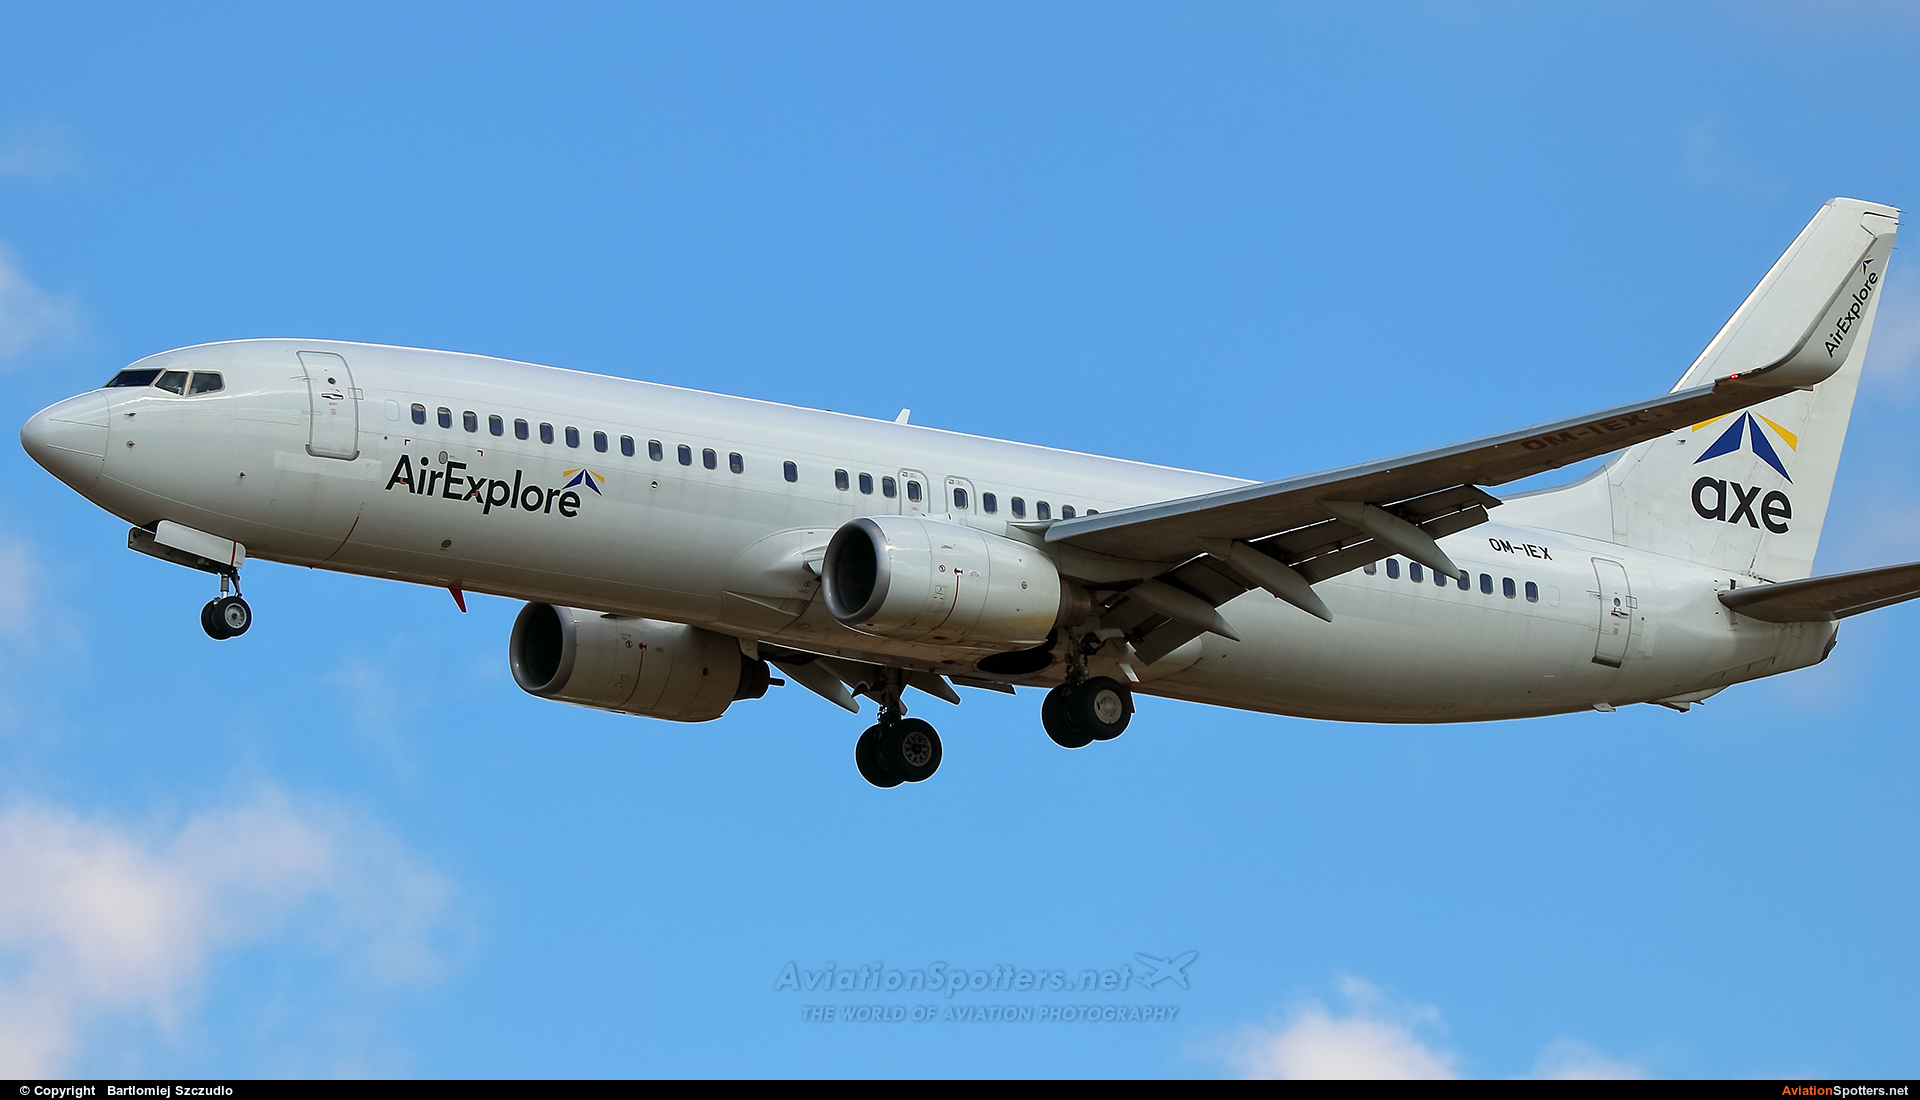 Air Explore  -  737-800  (OM-IEX) By Bartlomiej Szczudlo  (BartekSzczudlo)